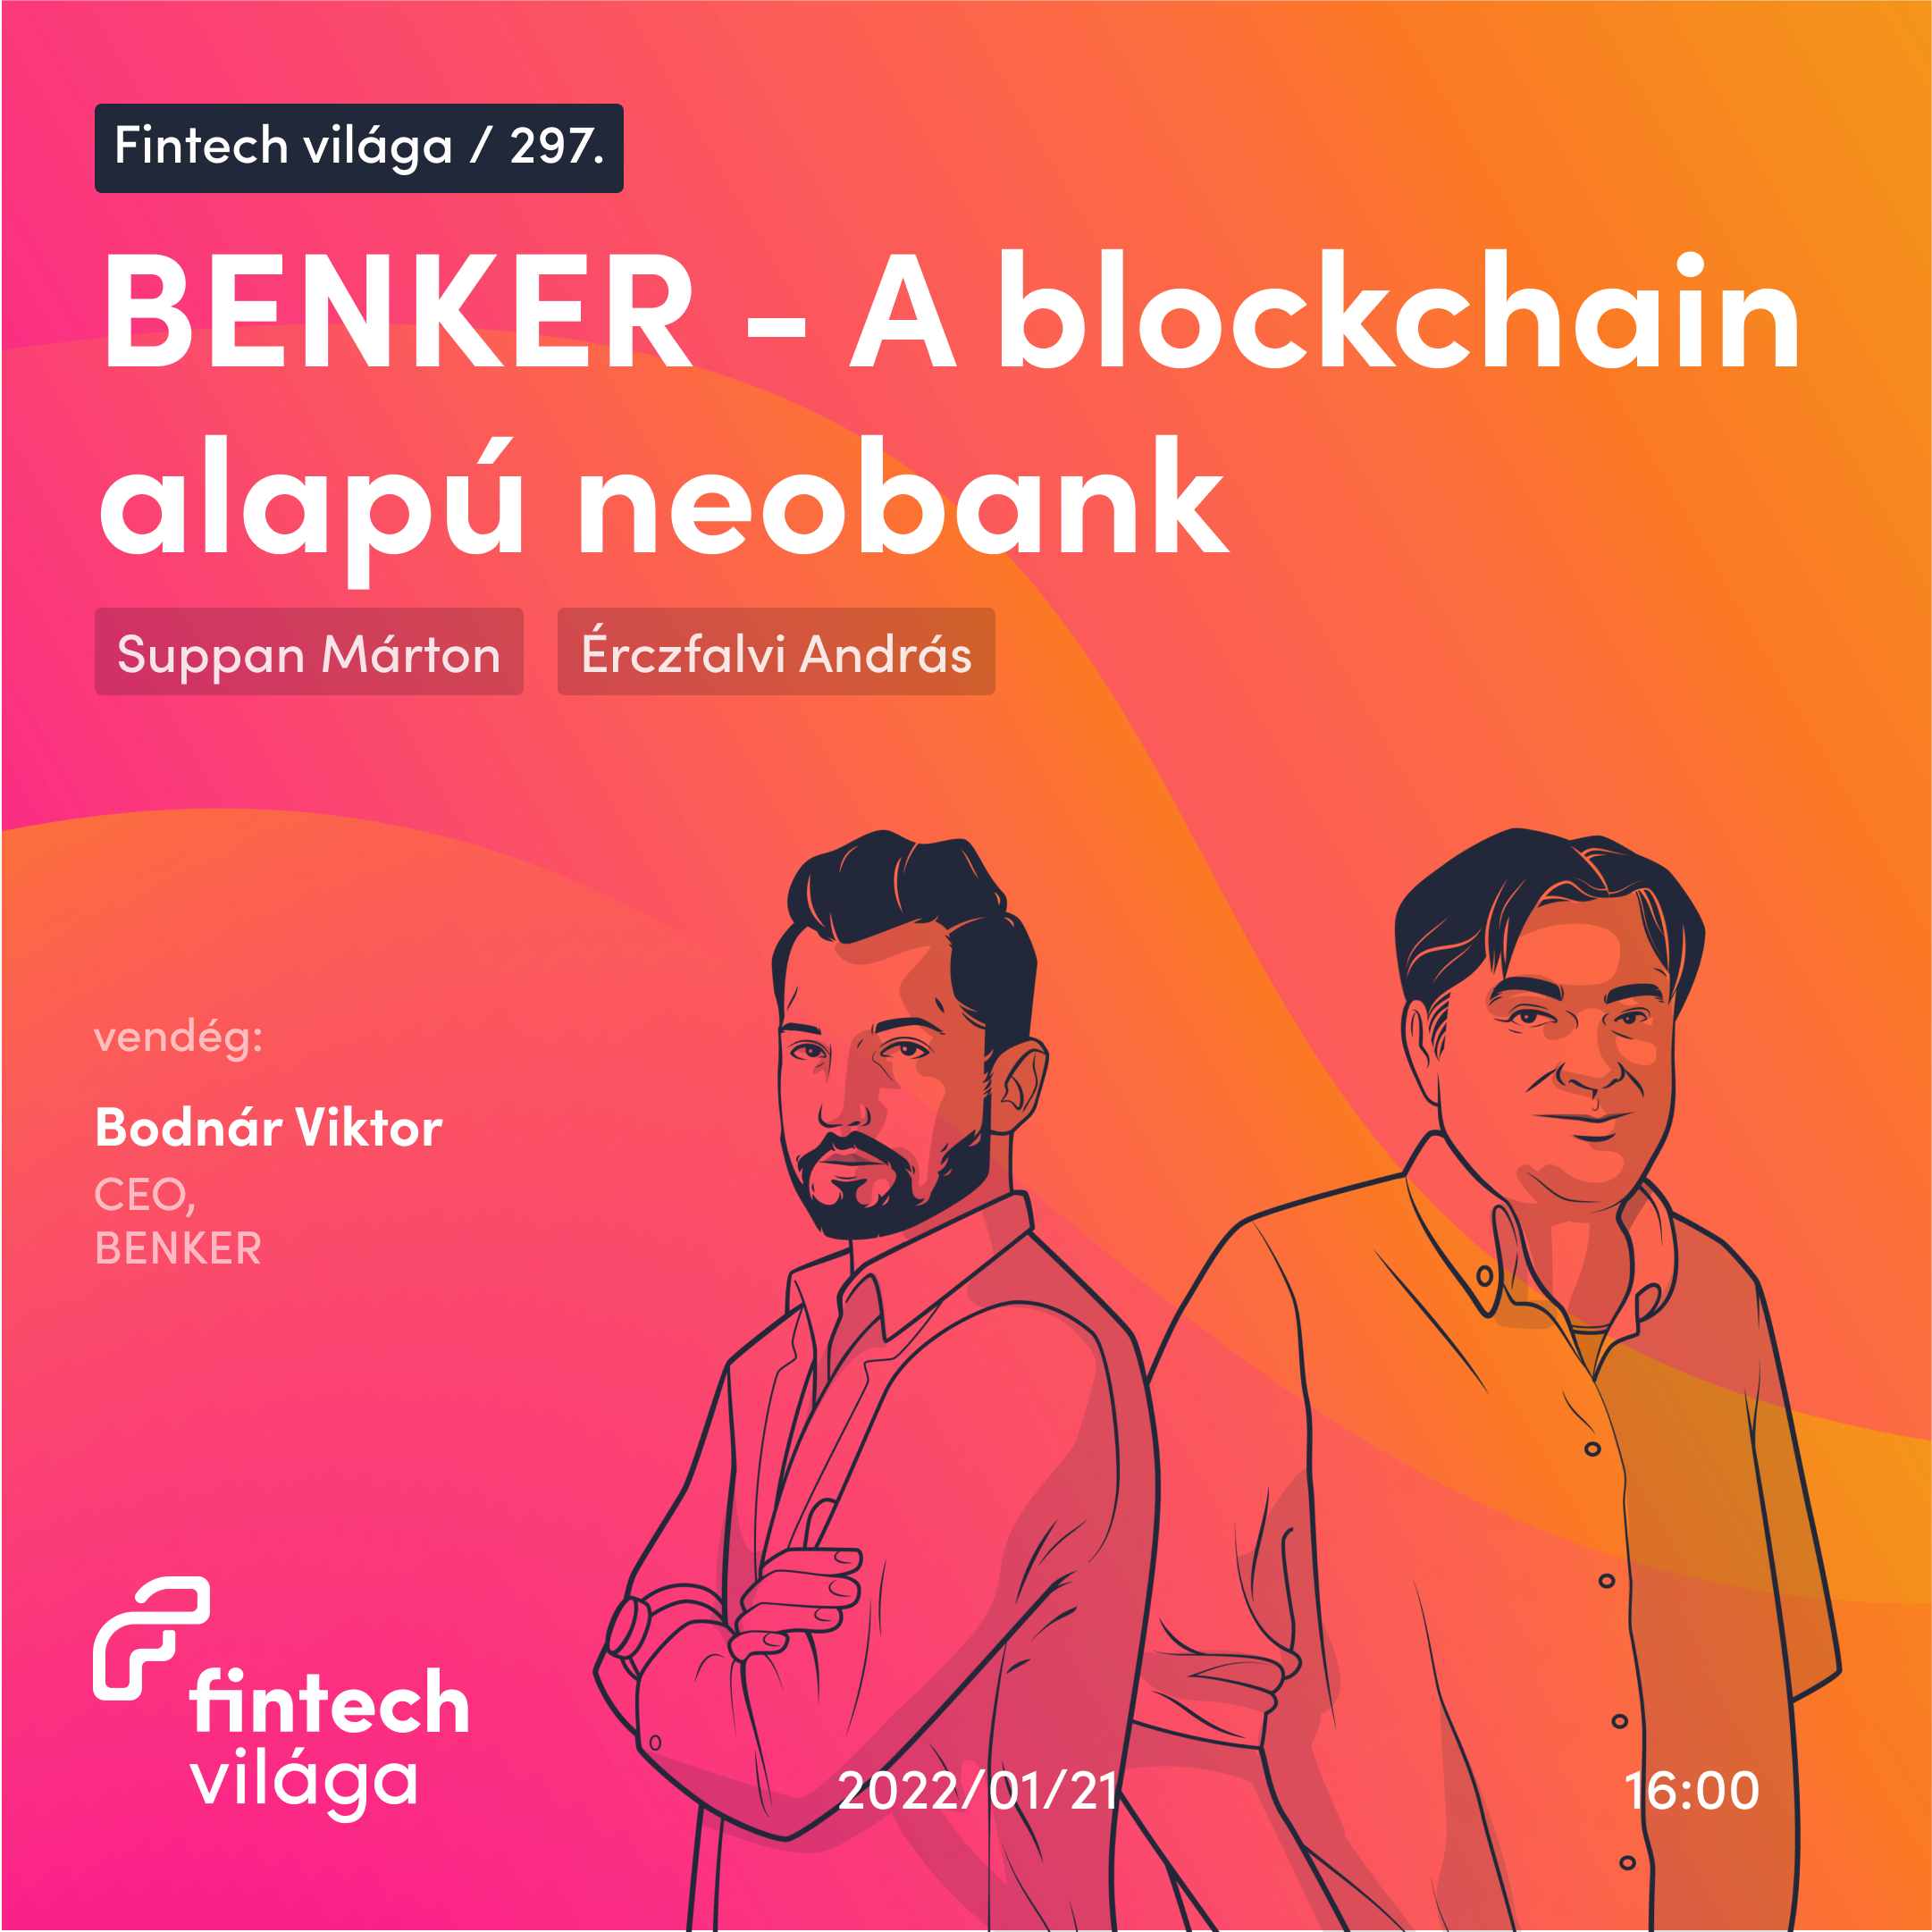 BENKER - A blockchain alapú neobank